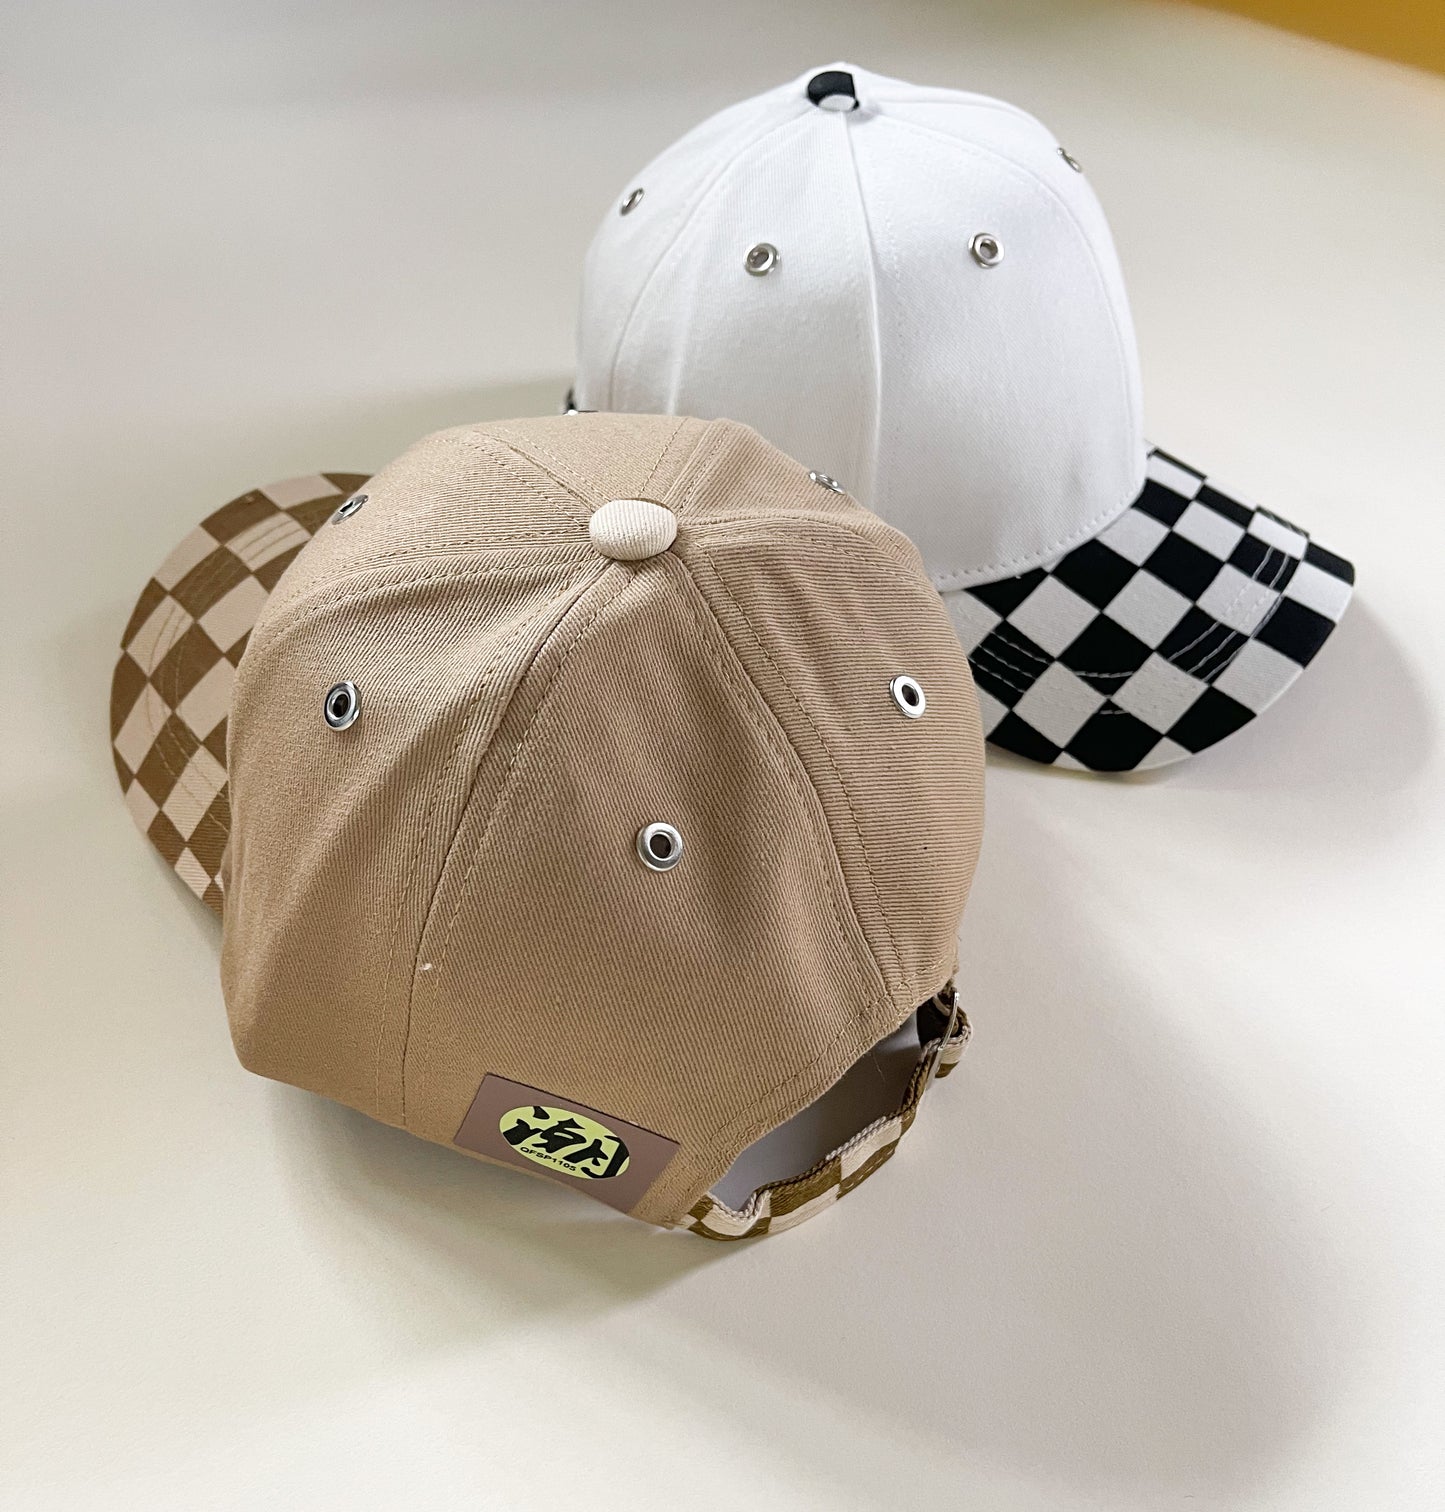 Checkered hats